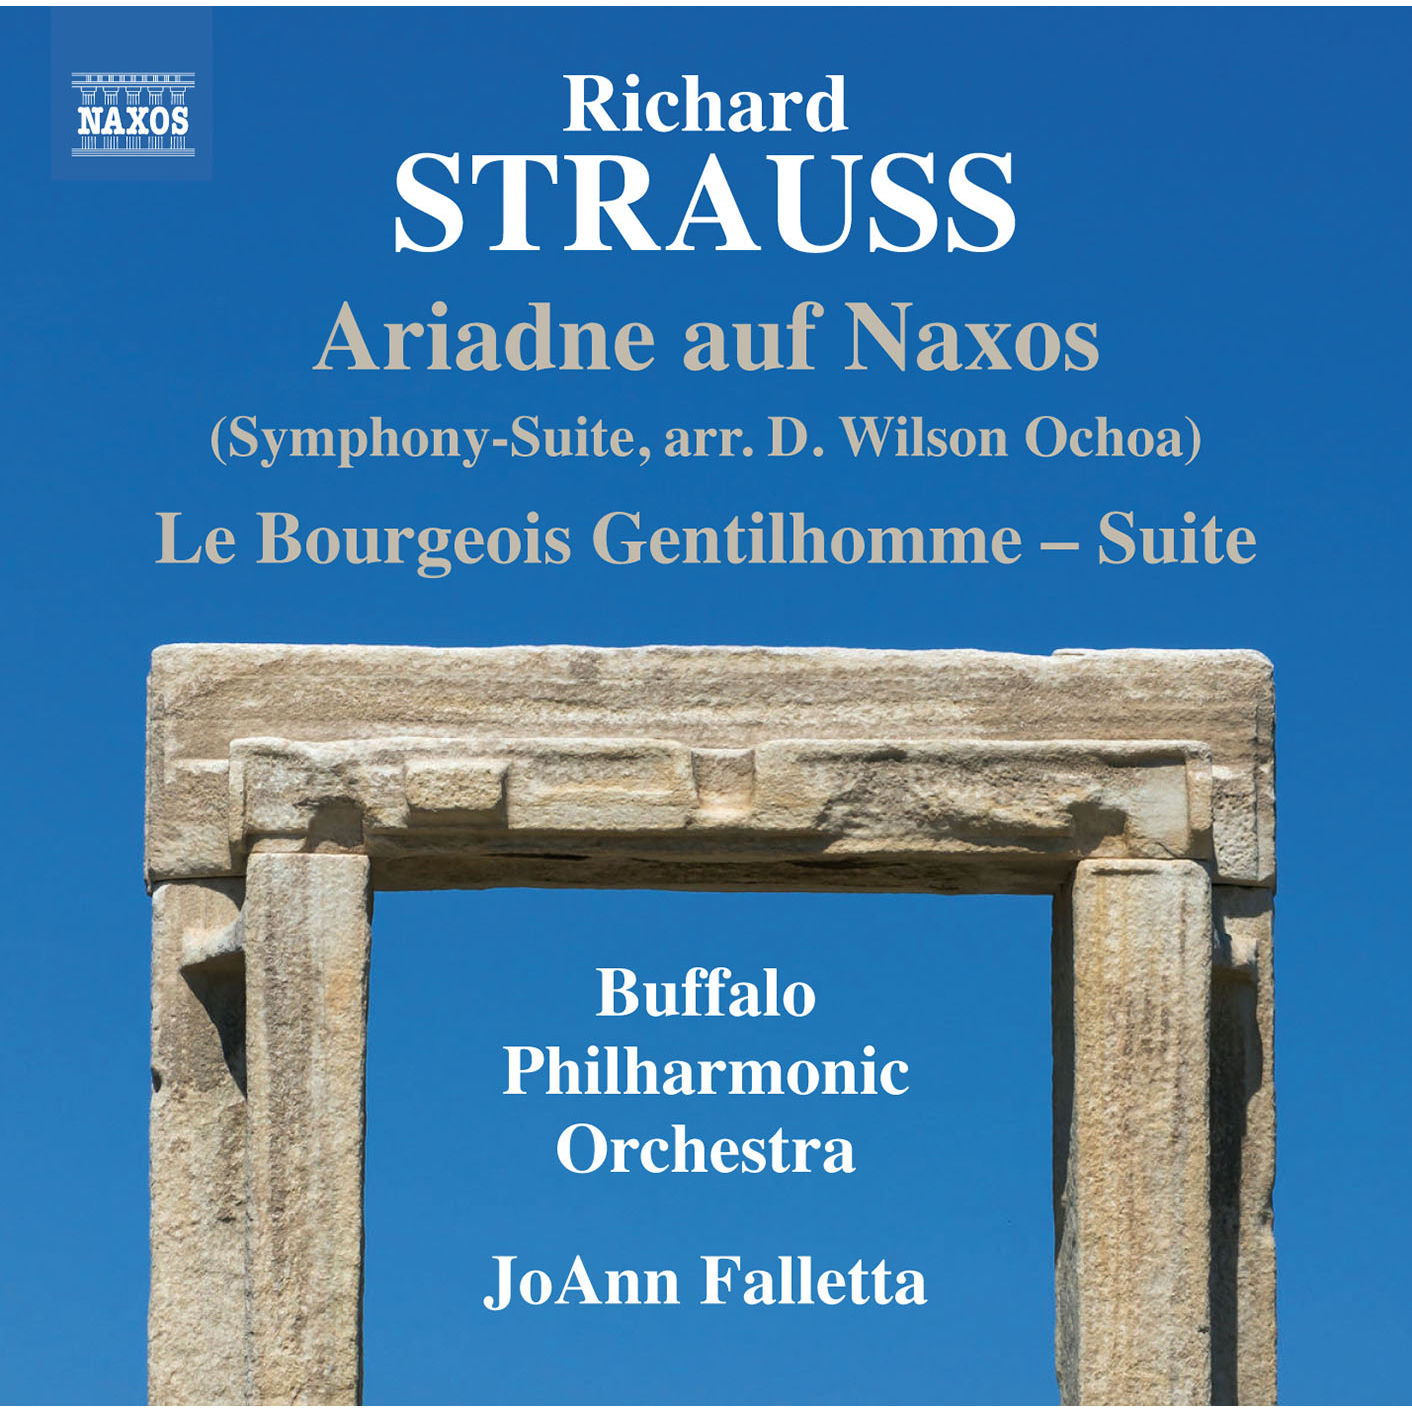 Buffalo Philharmonic Orchestra, JoAnn Falletta – R. Strauss: Le bourgeois gentilhomme Suite & Ariadne auf Naxos, Symphony-suite (2017) [FLAC 24bit/96kHz]